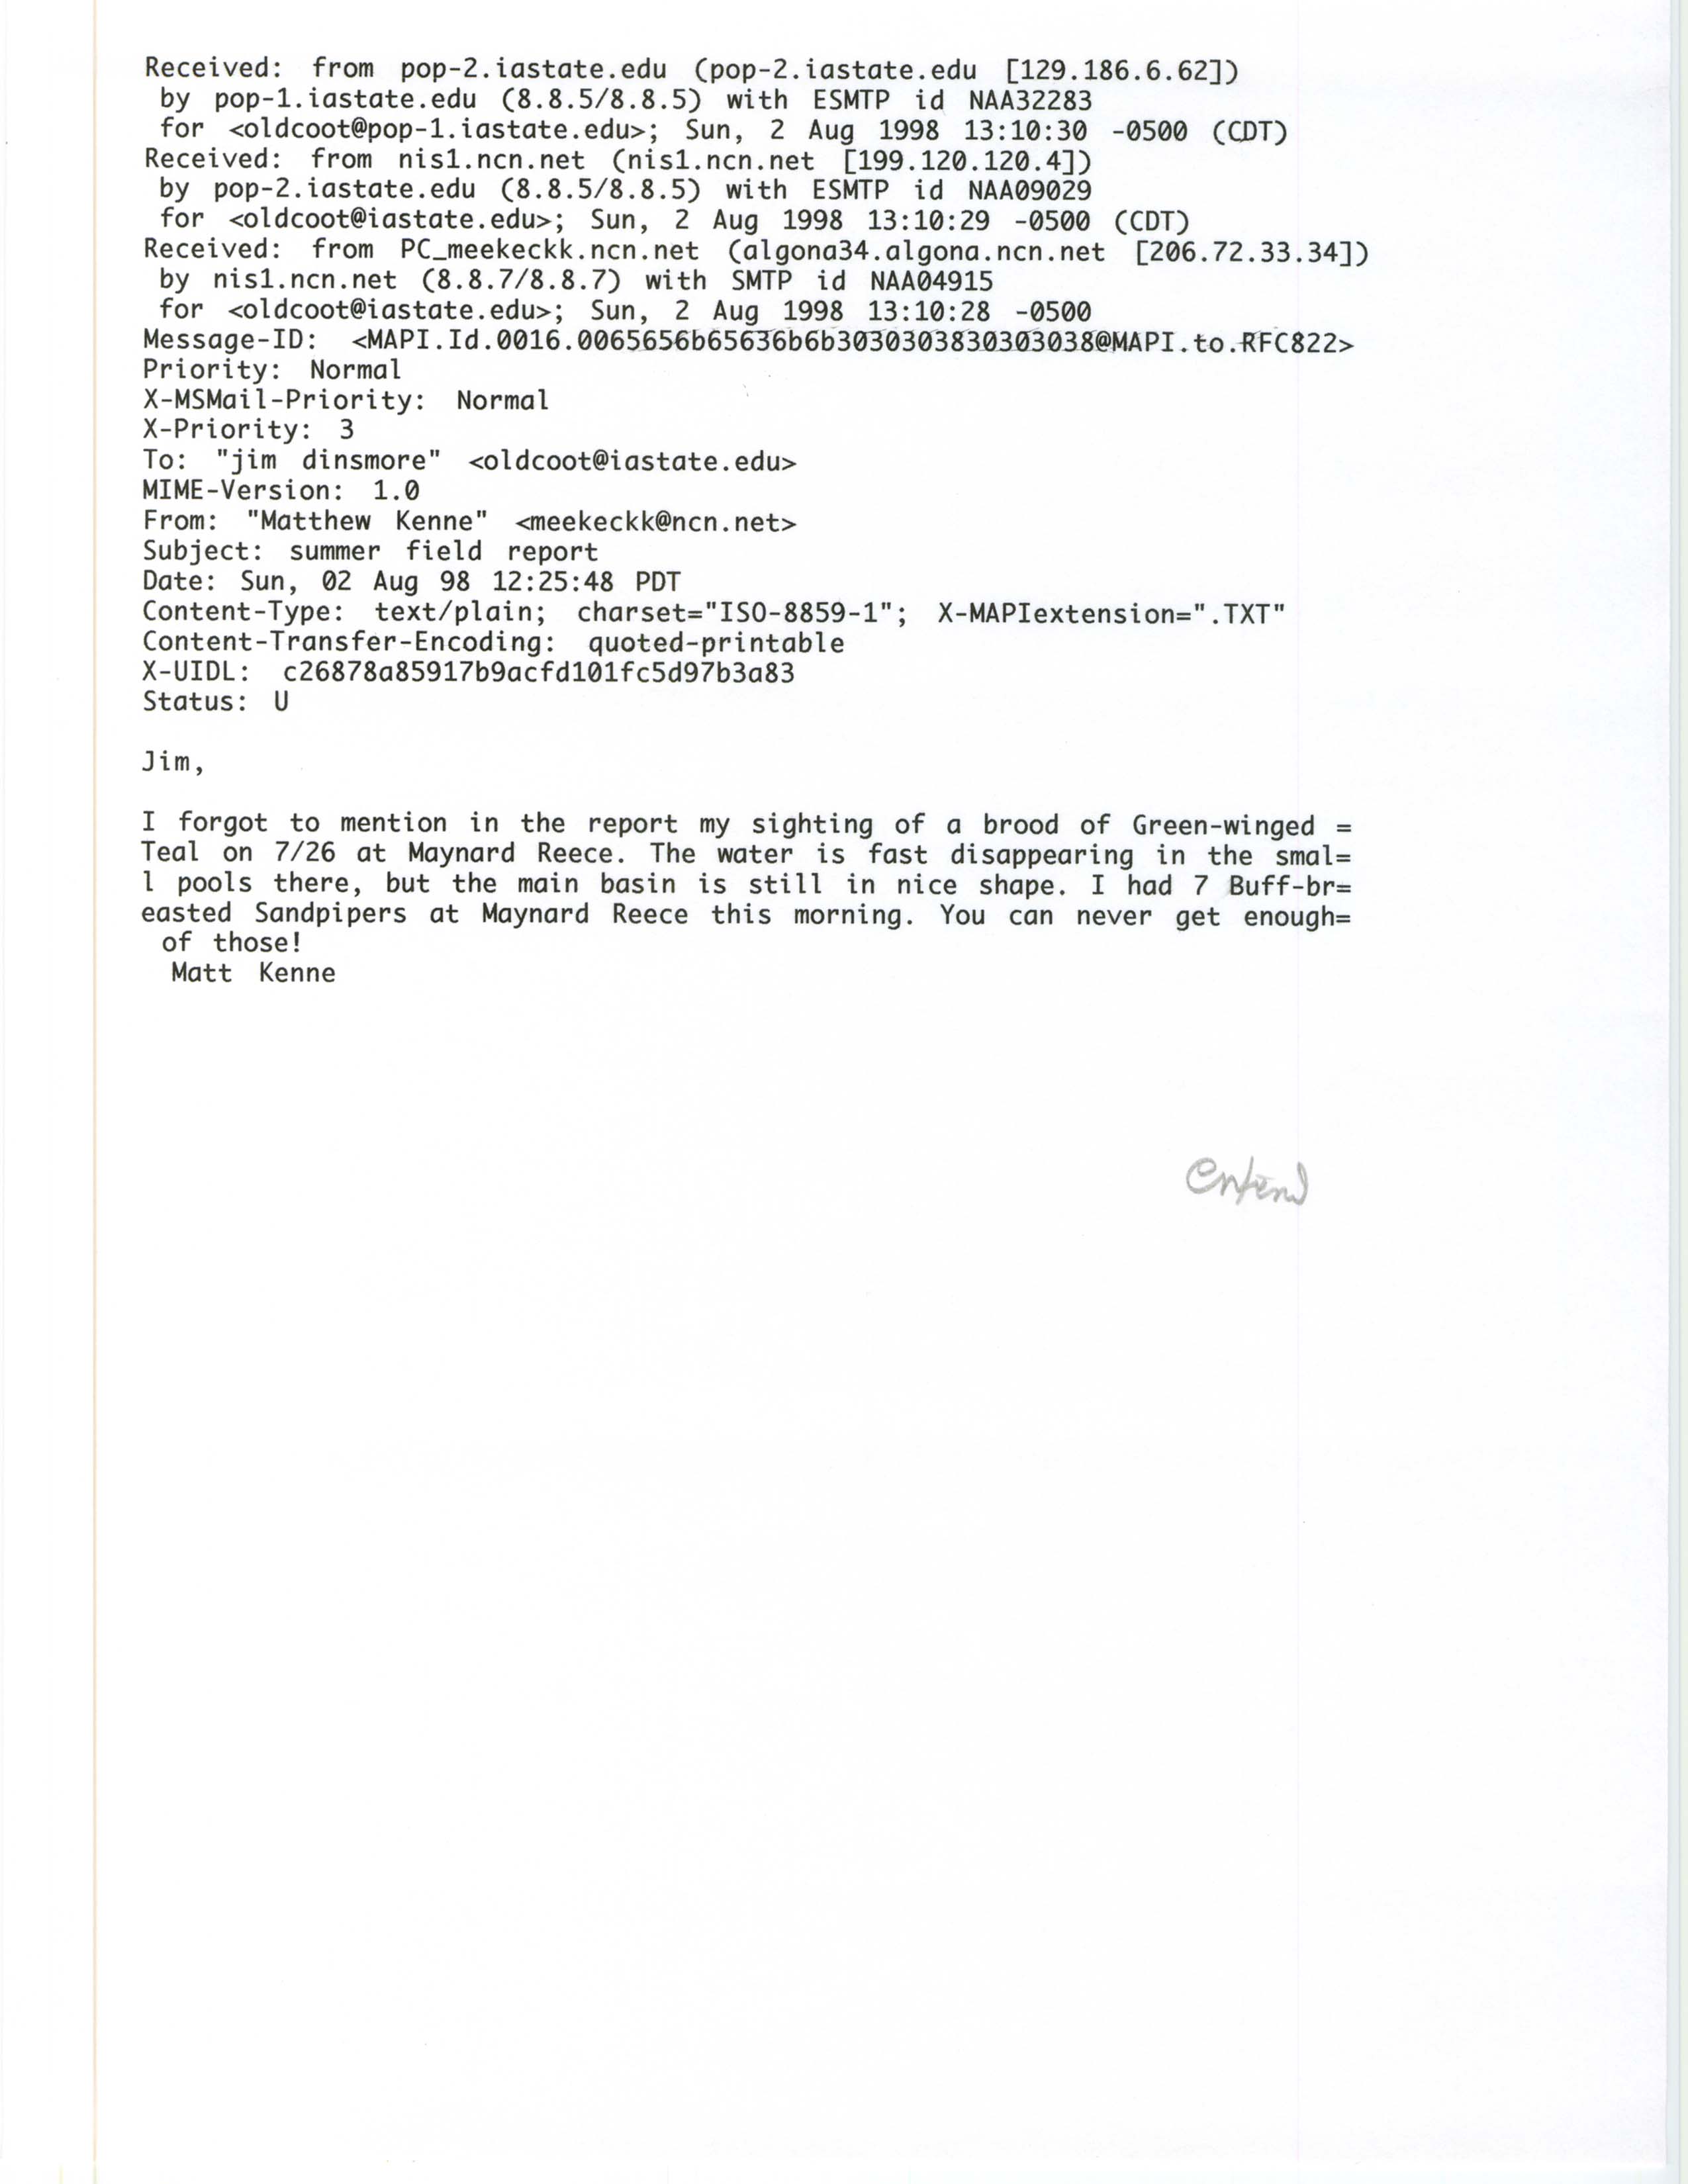 Matthew Kenne email to Jim Dinsmore regarding summer field report, August 2, 1998